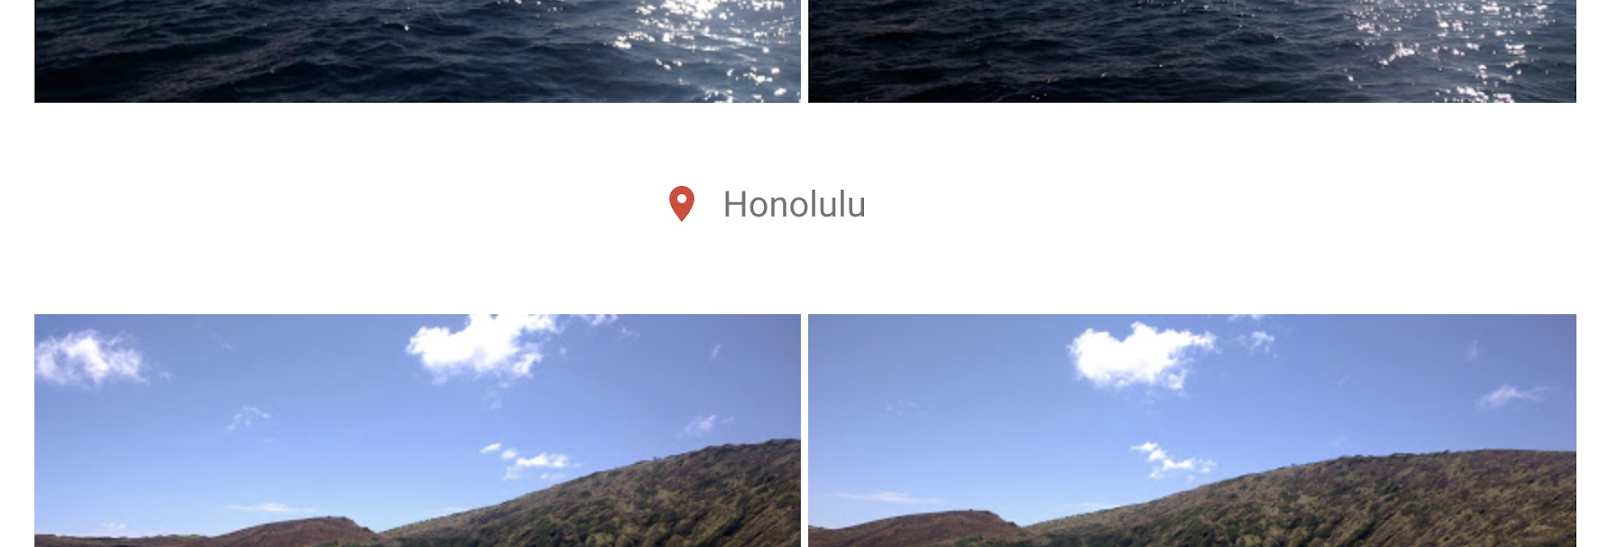 Screenshot of a location enrichment shown in Google Photos